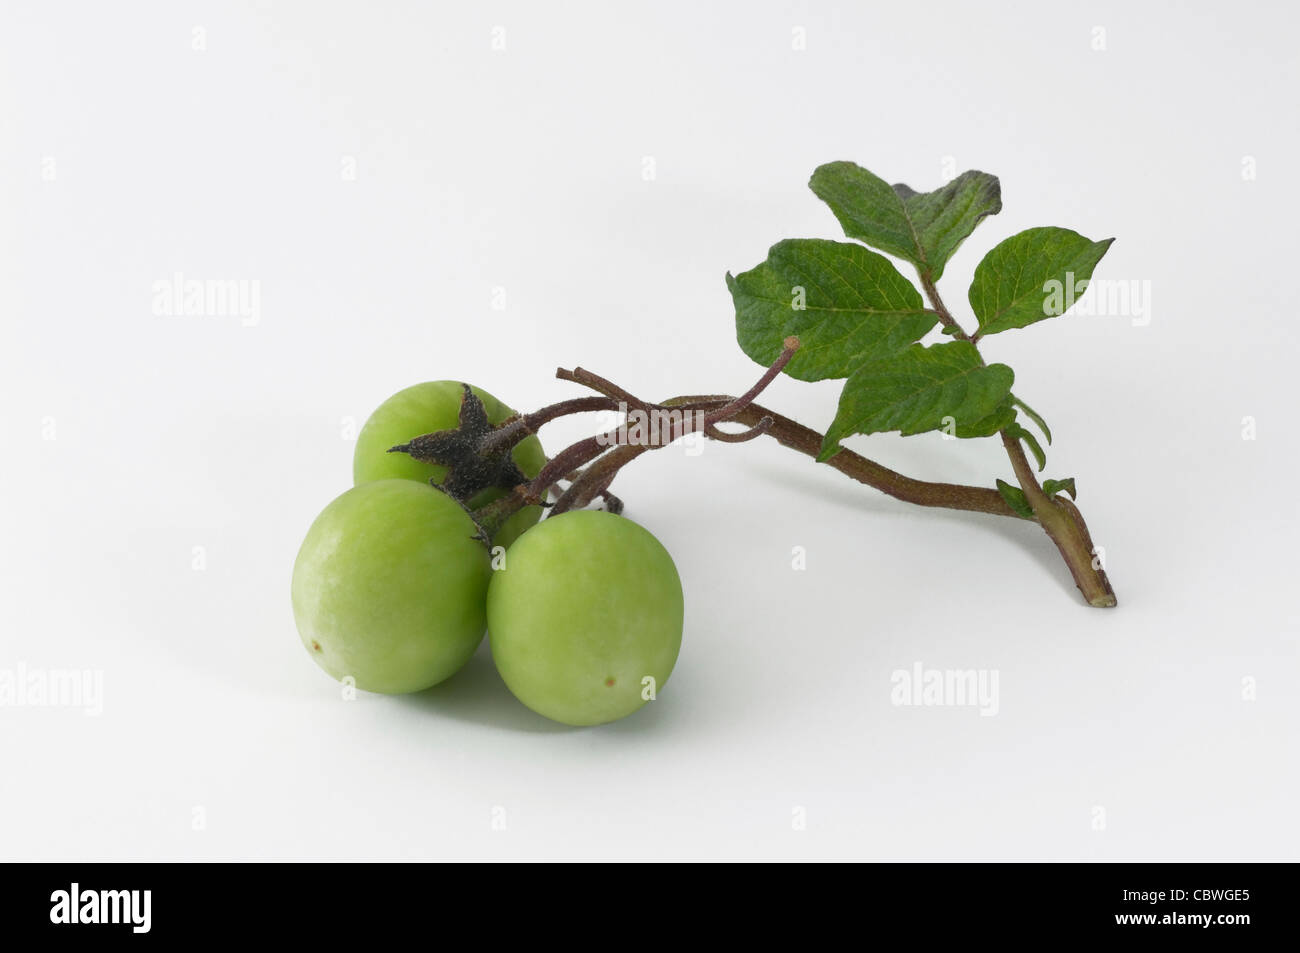 Potato (Solanum tuberosum). Stalk with small green fruit. Studio picture against a white background. Stock Photo